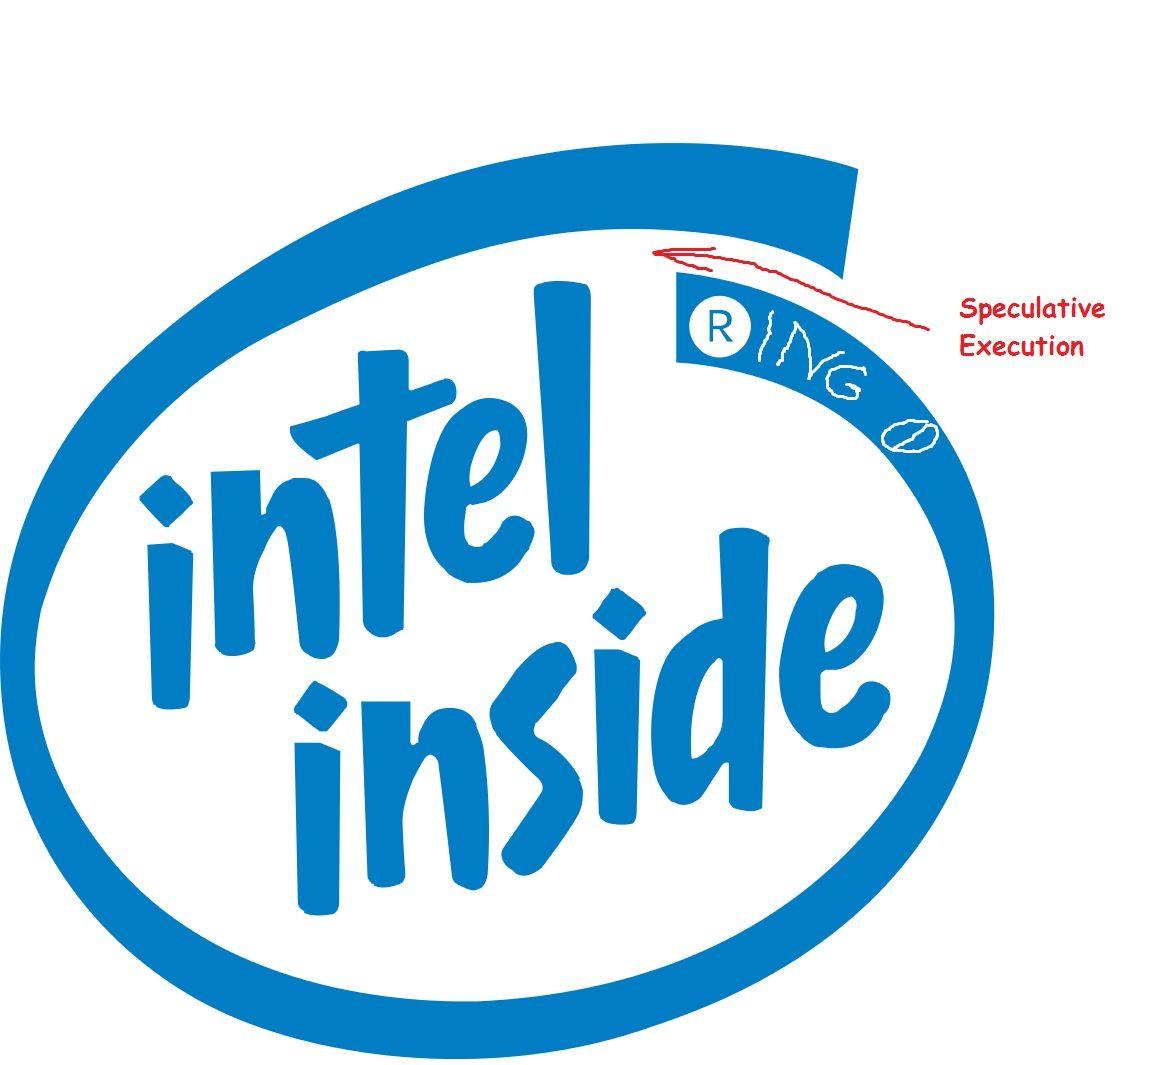 Nice Intel Logo - The old Intel logo makes sense now : ProgrammerHumor